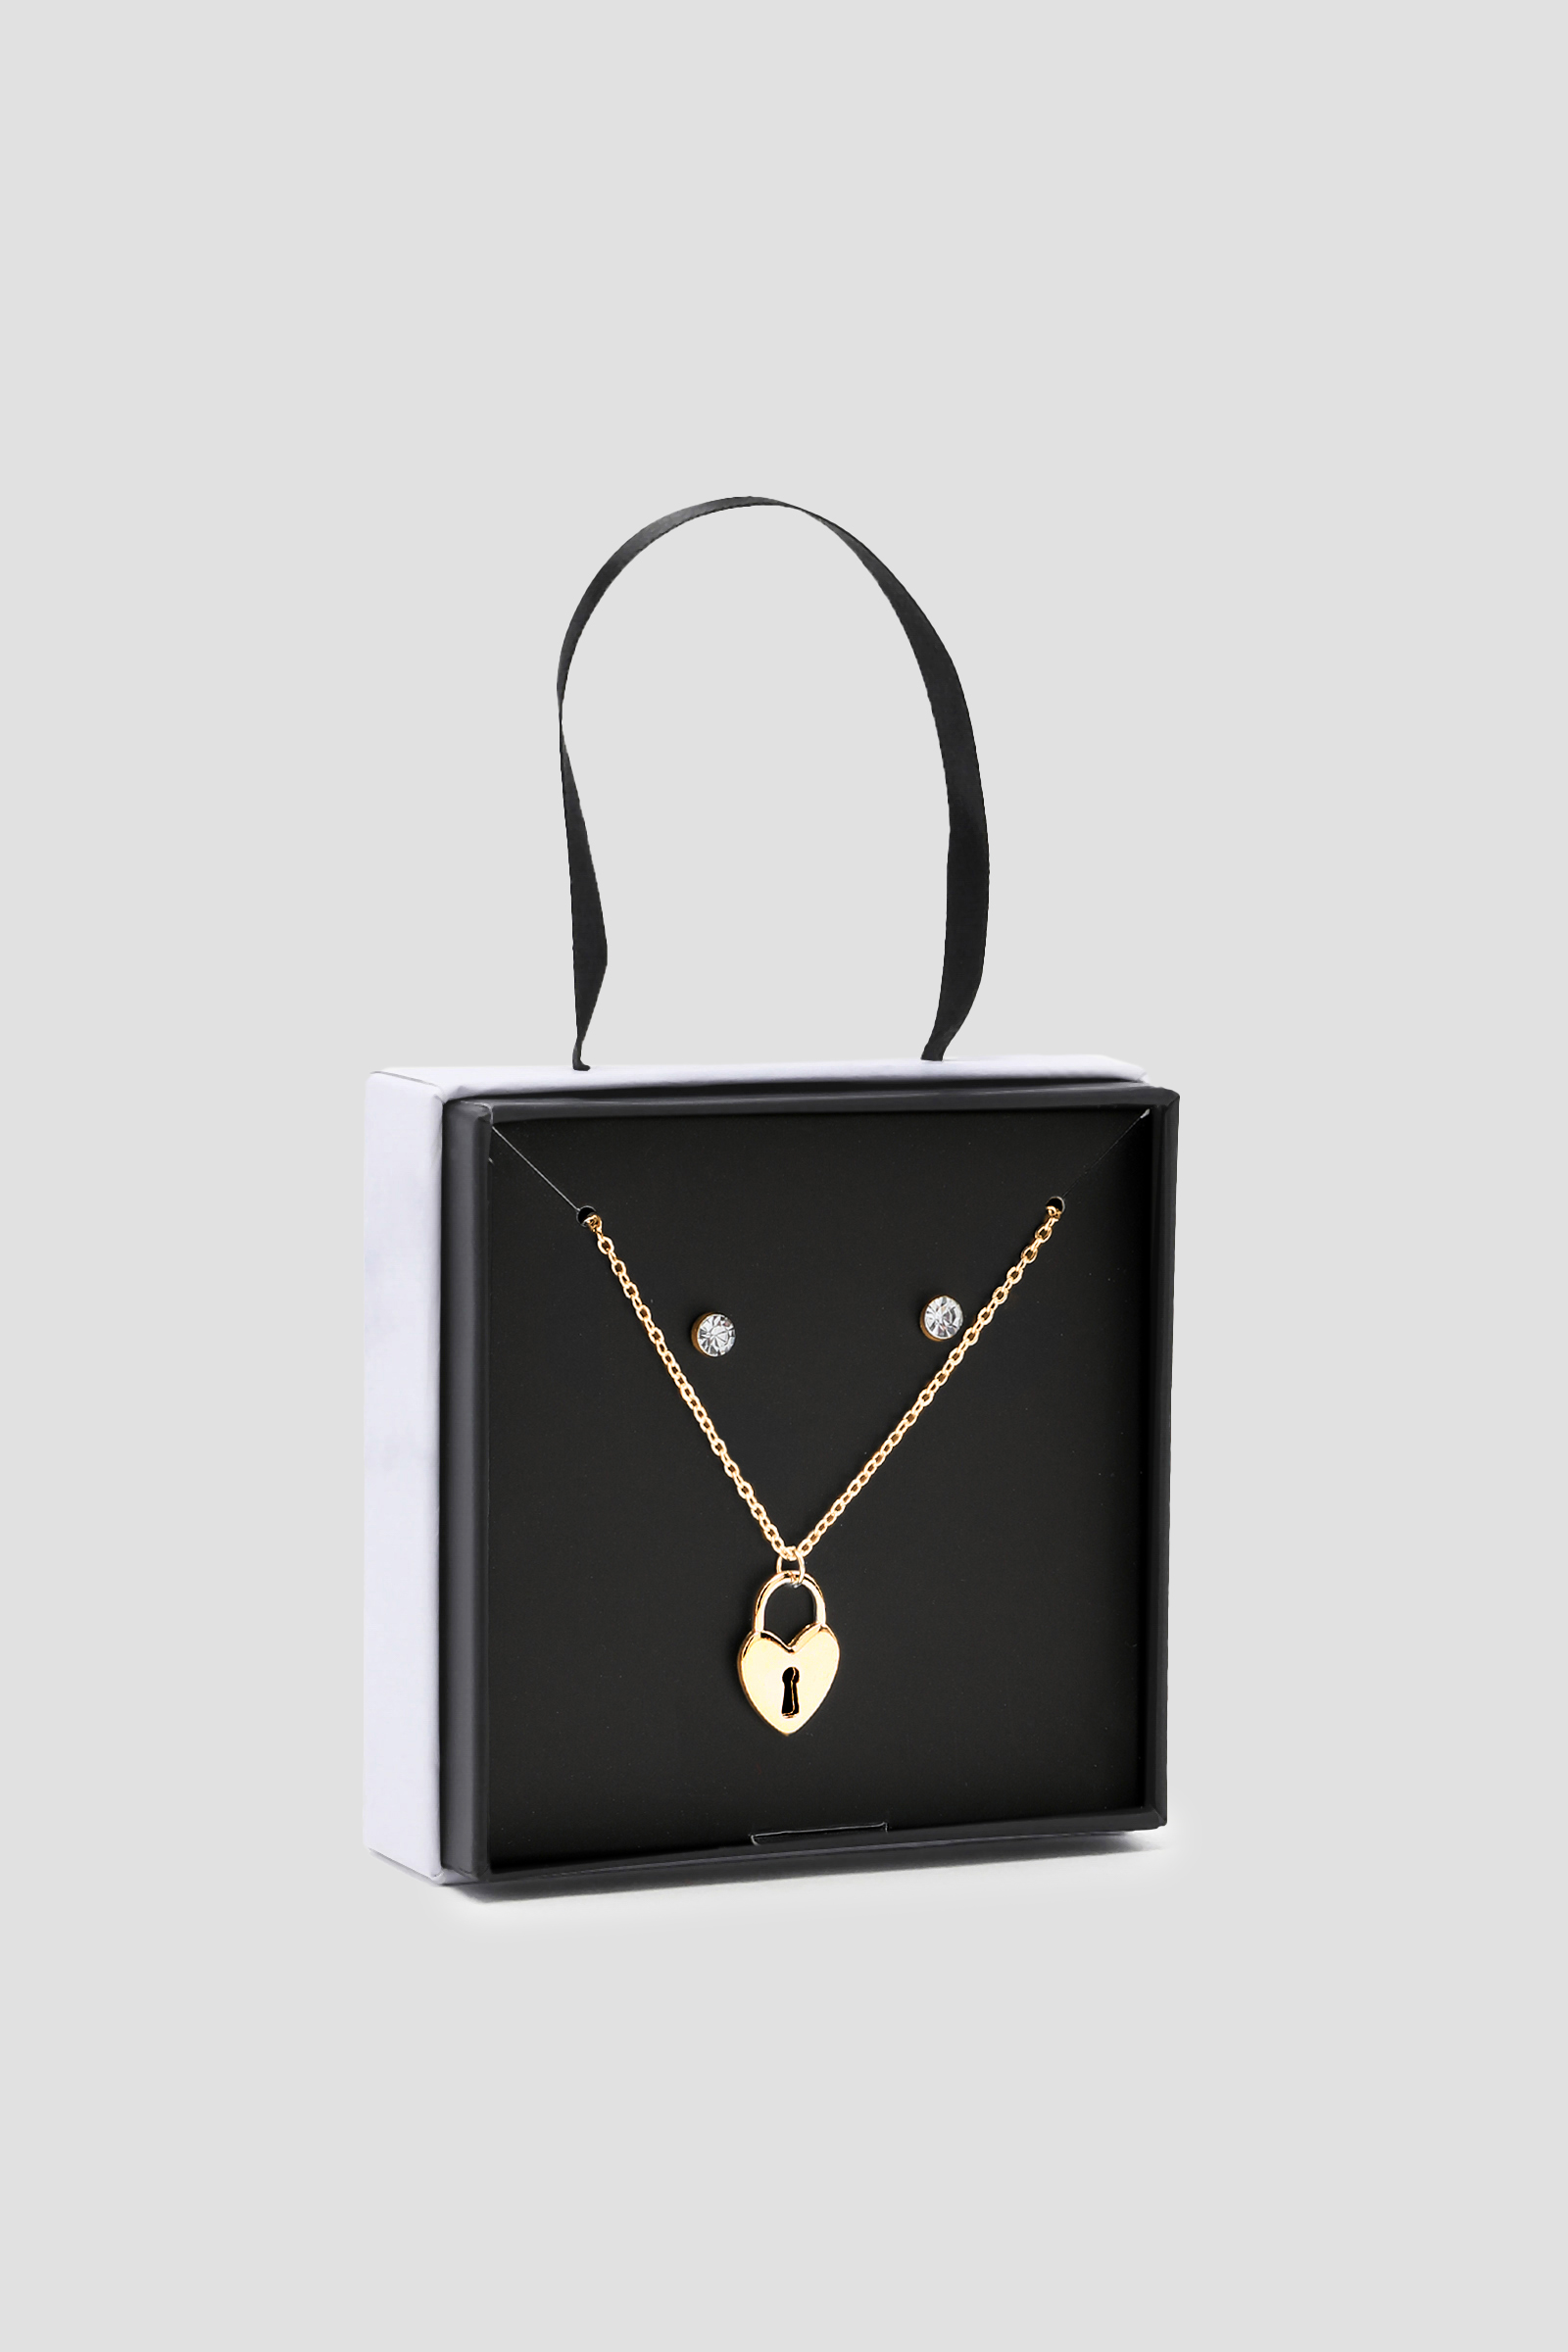 Ardene Lock Heart Necklace & Earring Gift Set in Gold | Stainless Steel